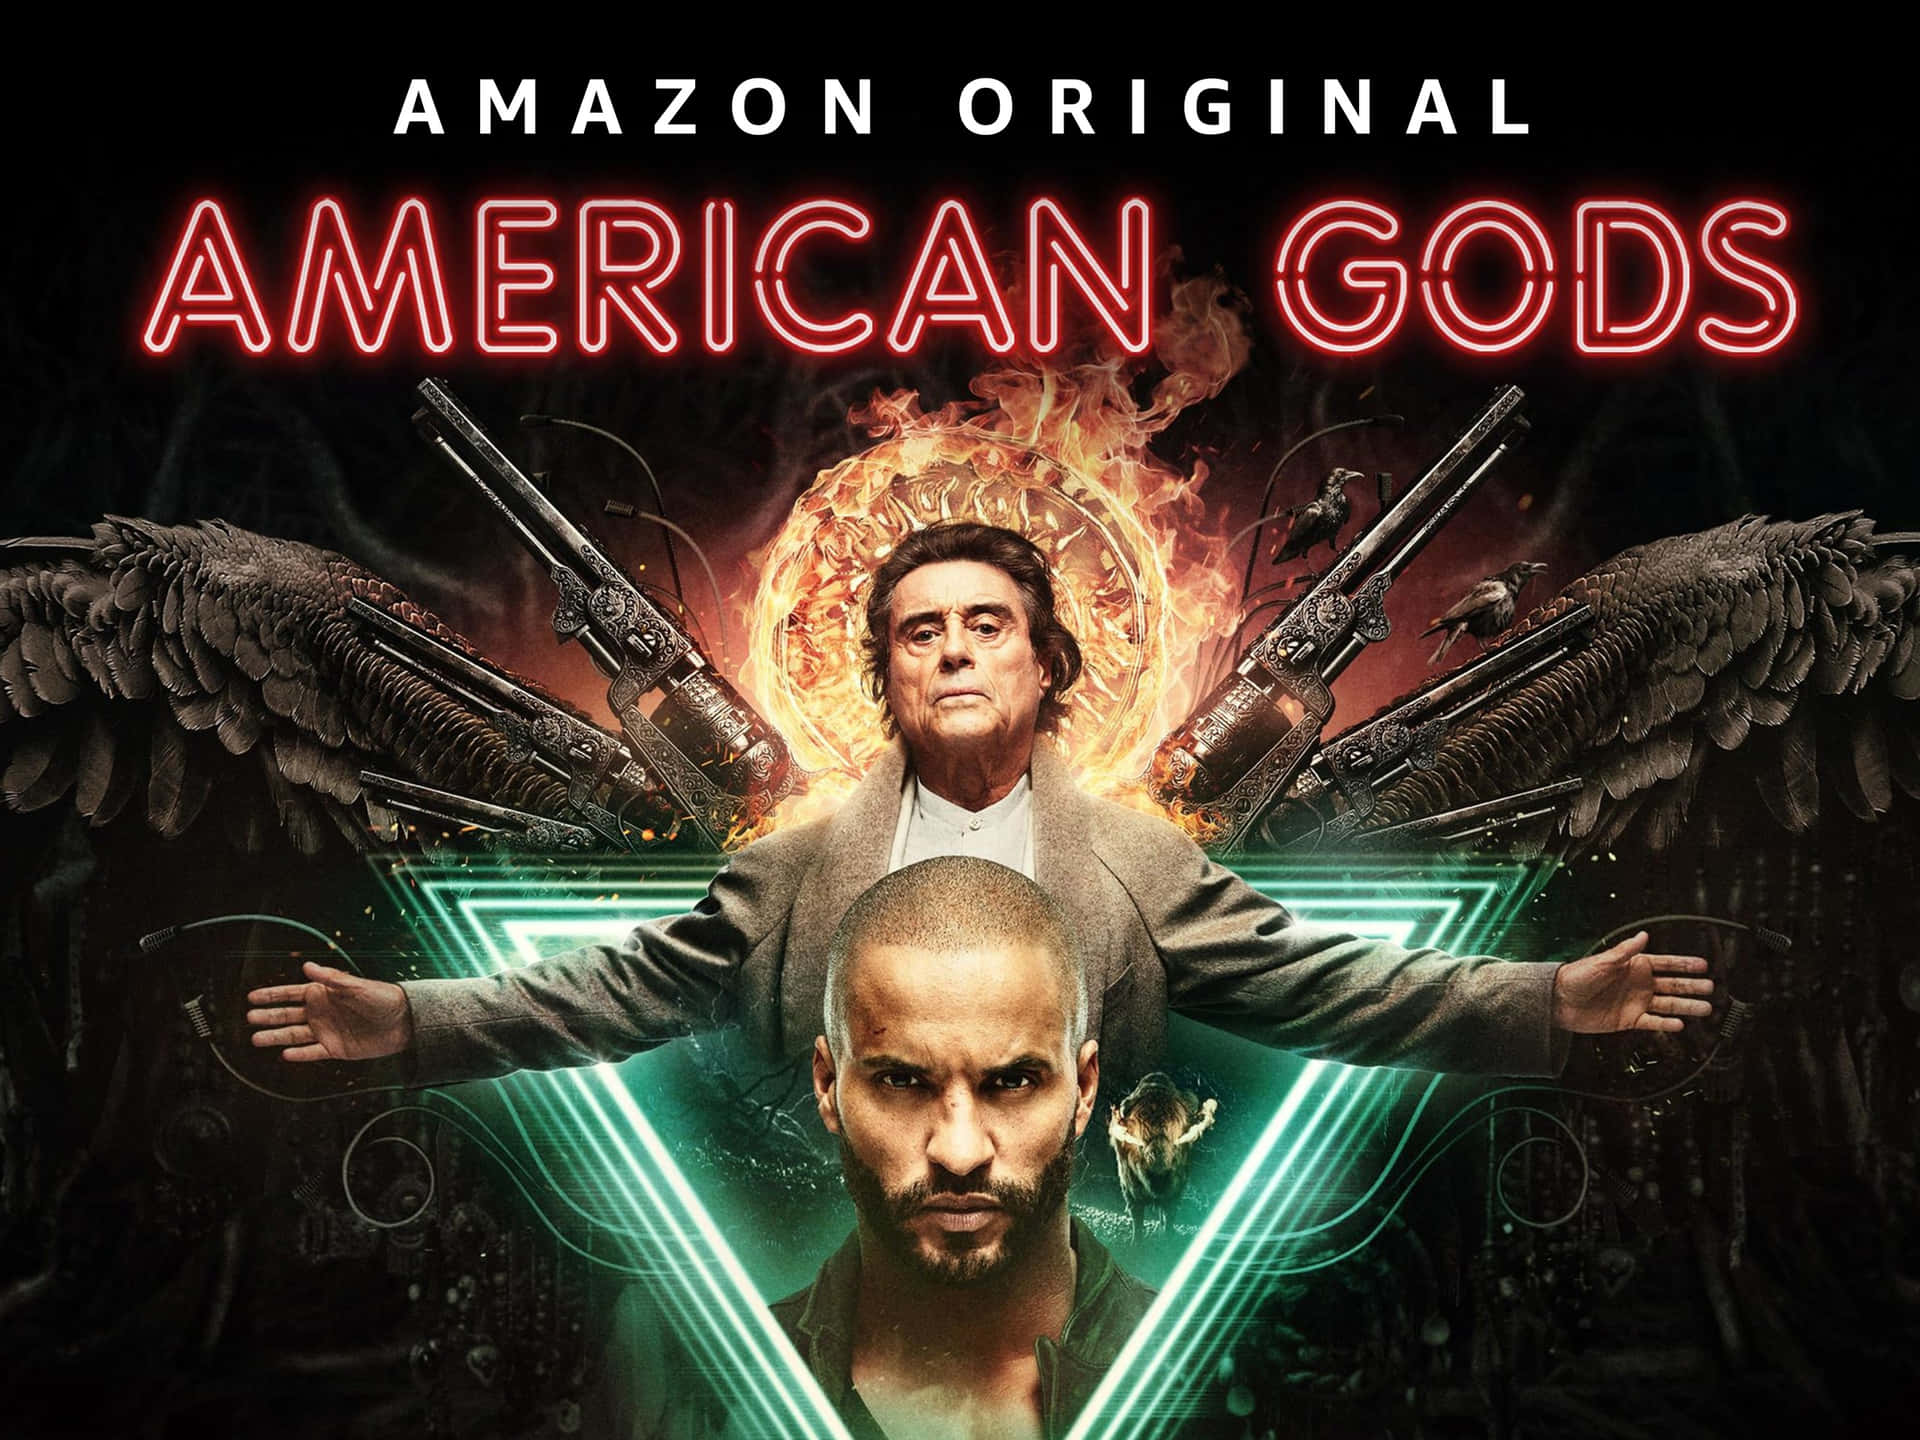 Take a peek into the mythological world of Neil Gaiman's American Gods.